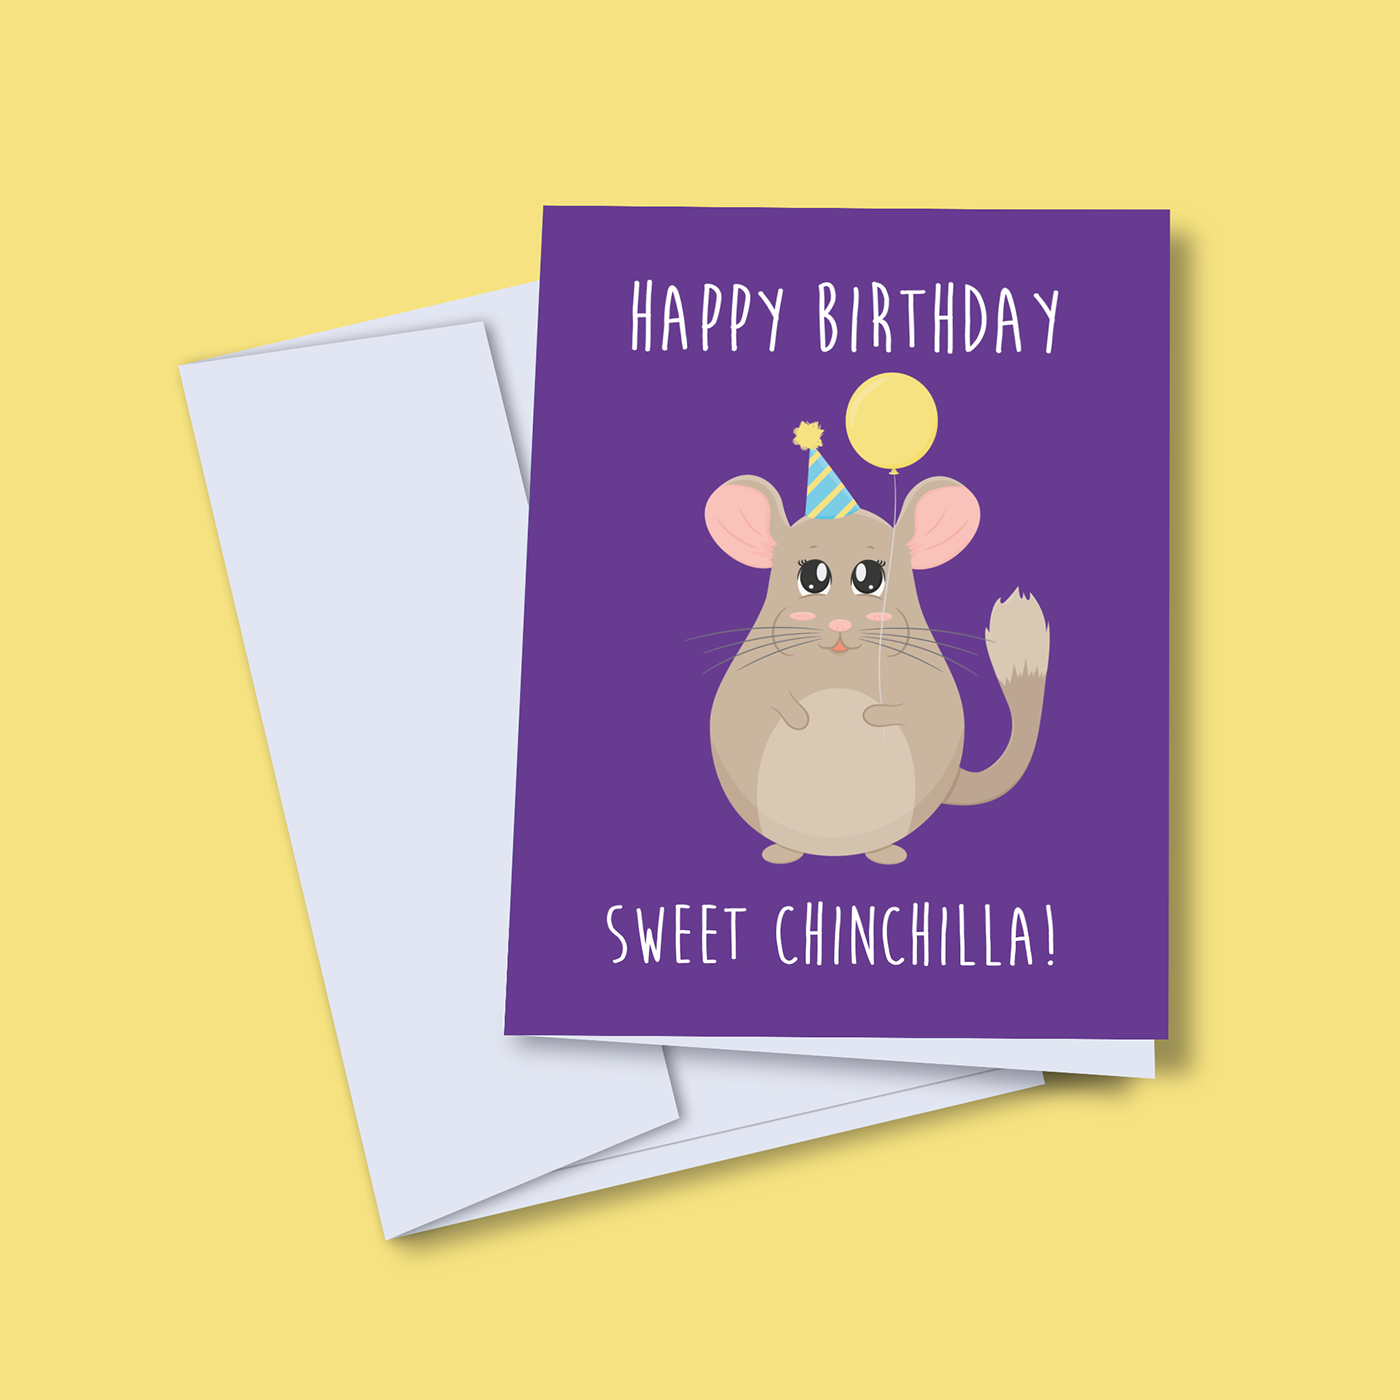 anchorman balloon Birthday card chinchilla greetings happy birthday mouse party sweet chinchilla